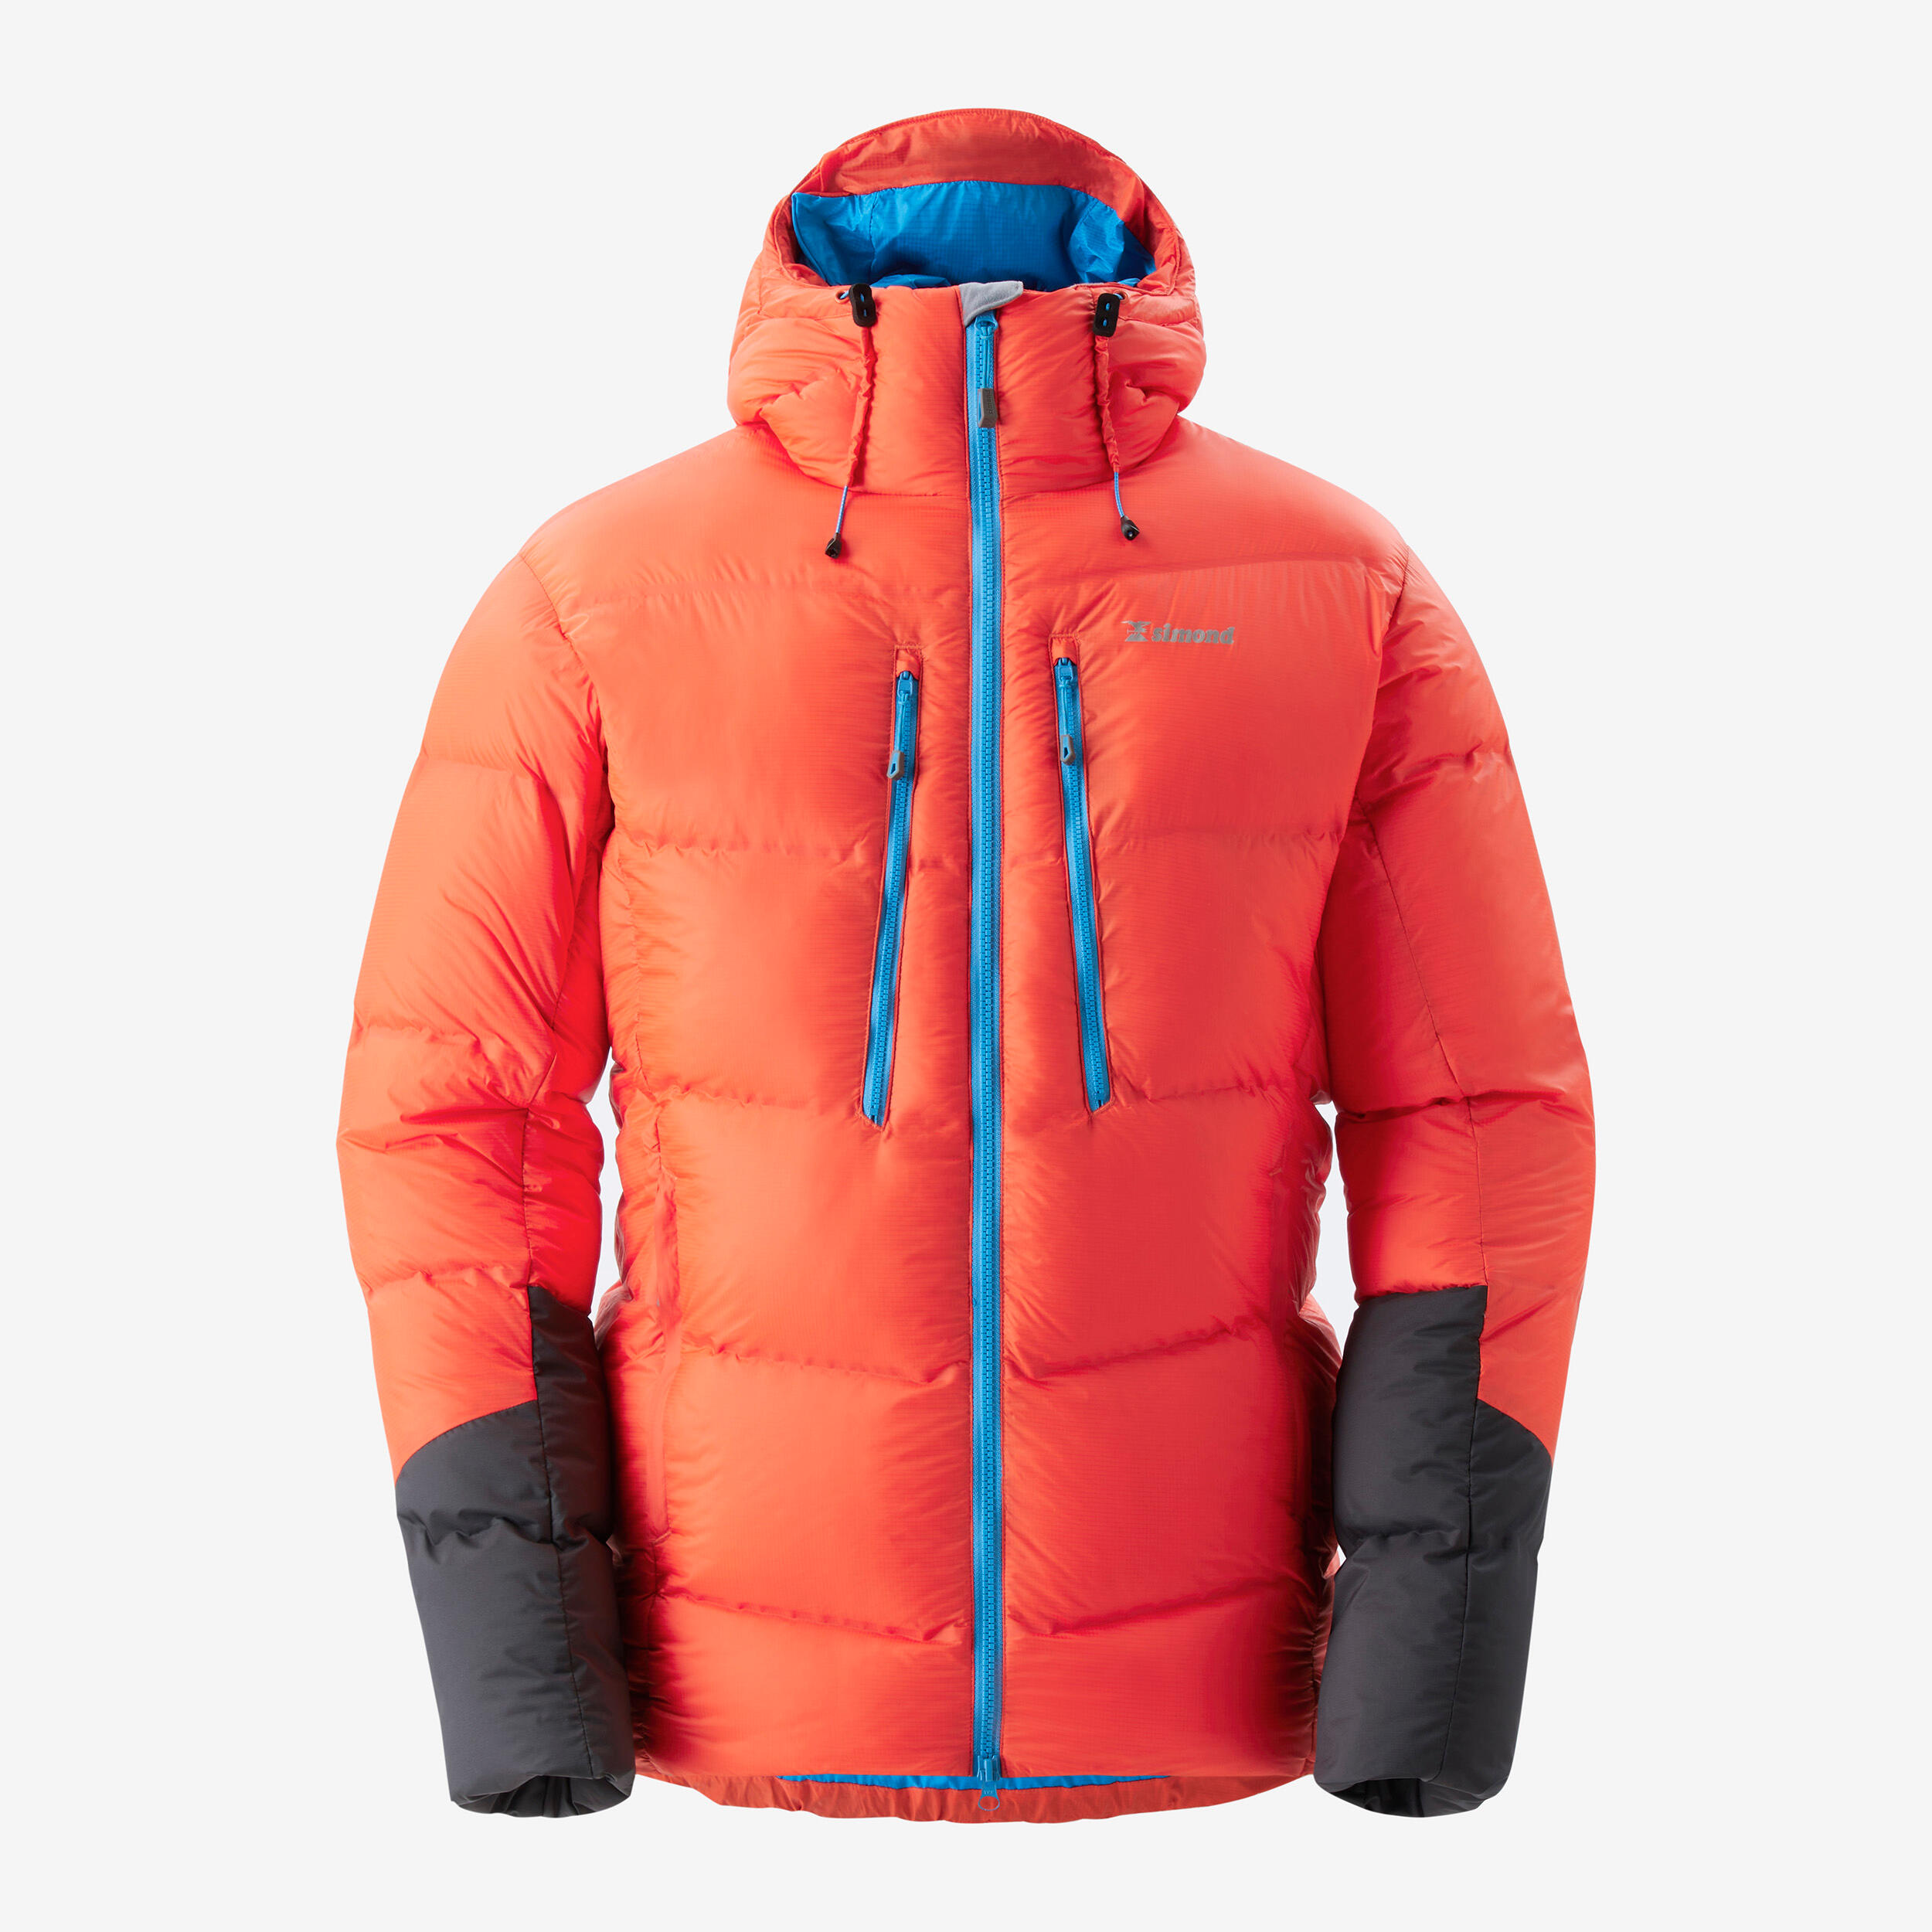 X-Light Down Jacket - A Fiercely Warm Jacket For Himalayan Treks